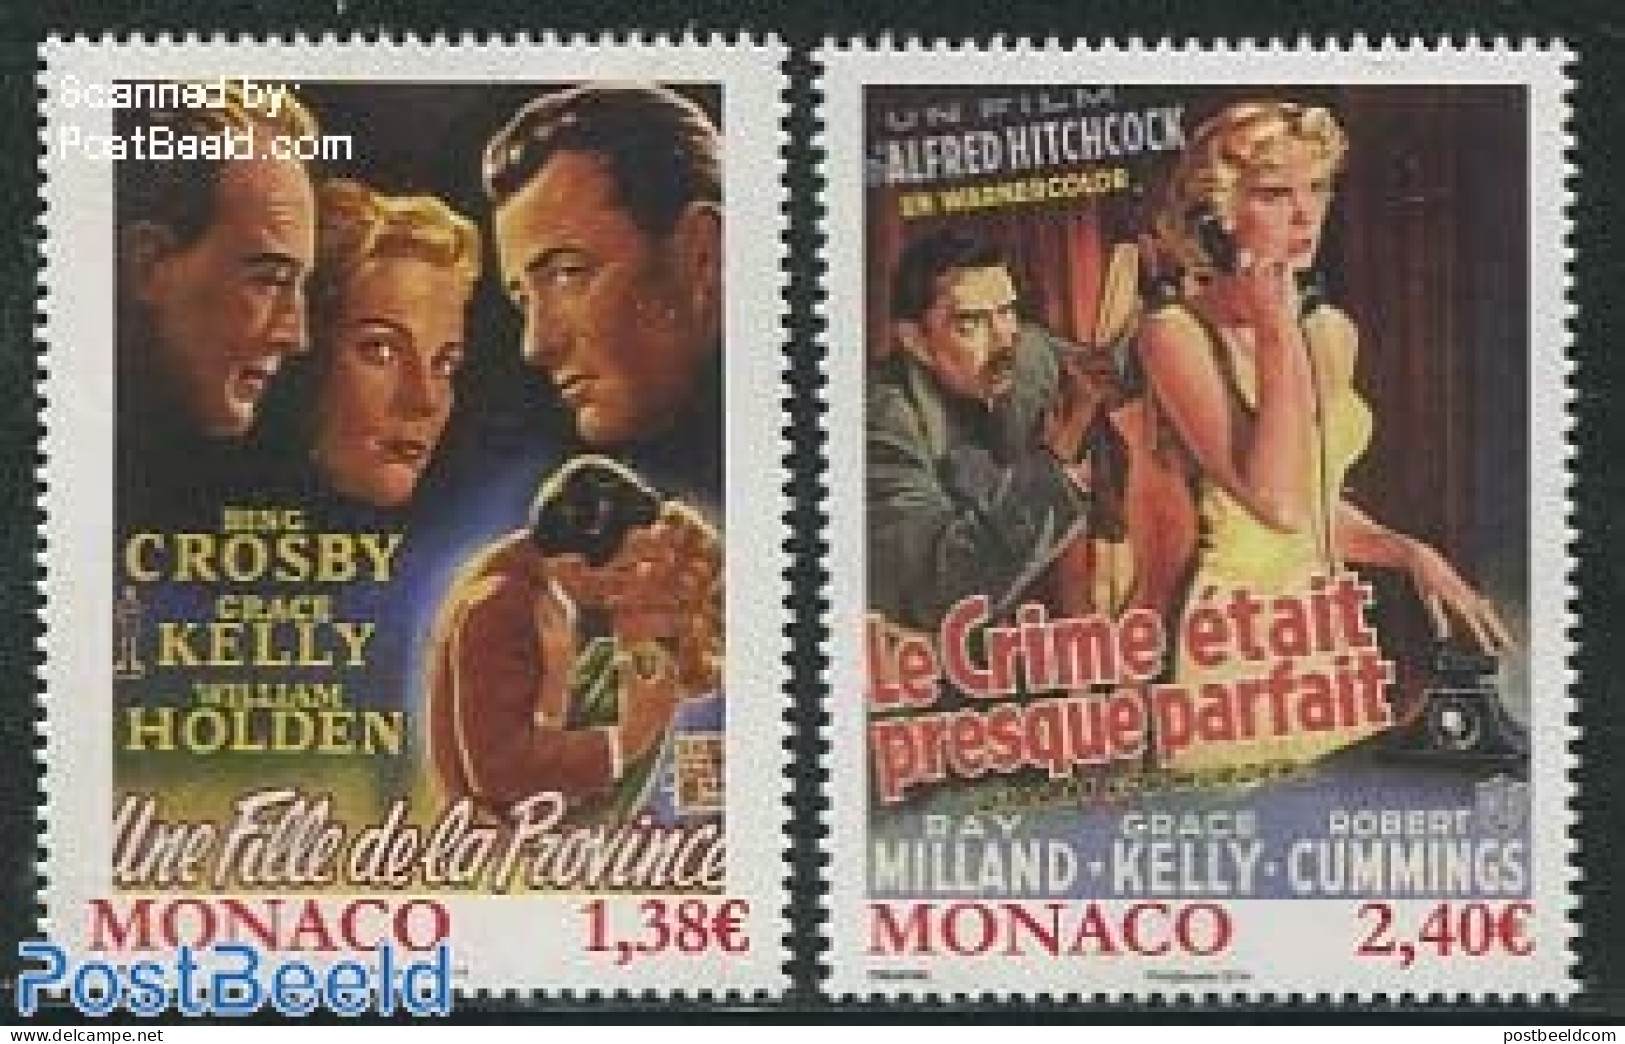 Monaco 2014 Movies With Grace Kelly 2v, Mint NH, Performance Art - Film - Movie Stars - Art - Poster Art - Ungebraucht